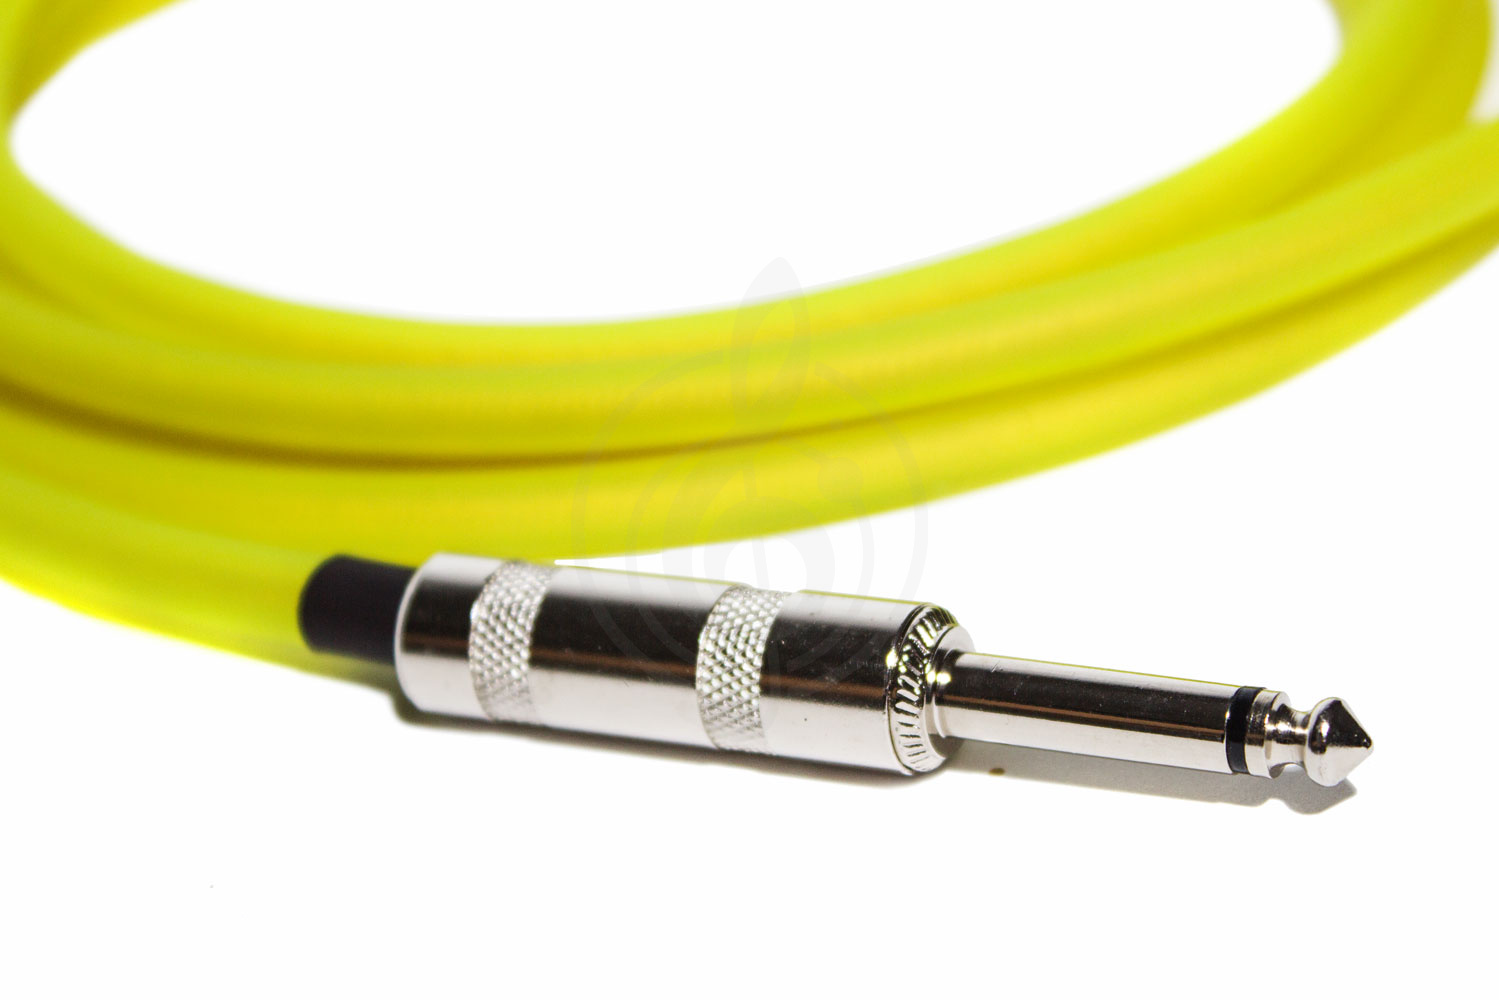  Jack-Jack инструментальный кабель Kirlin Kirlin IM-201-1 YEF Инструментальный кабель 1м IM-201-1 YEF - фото 2